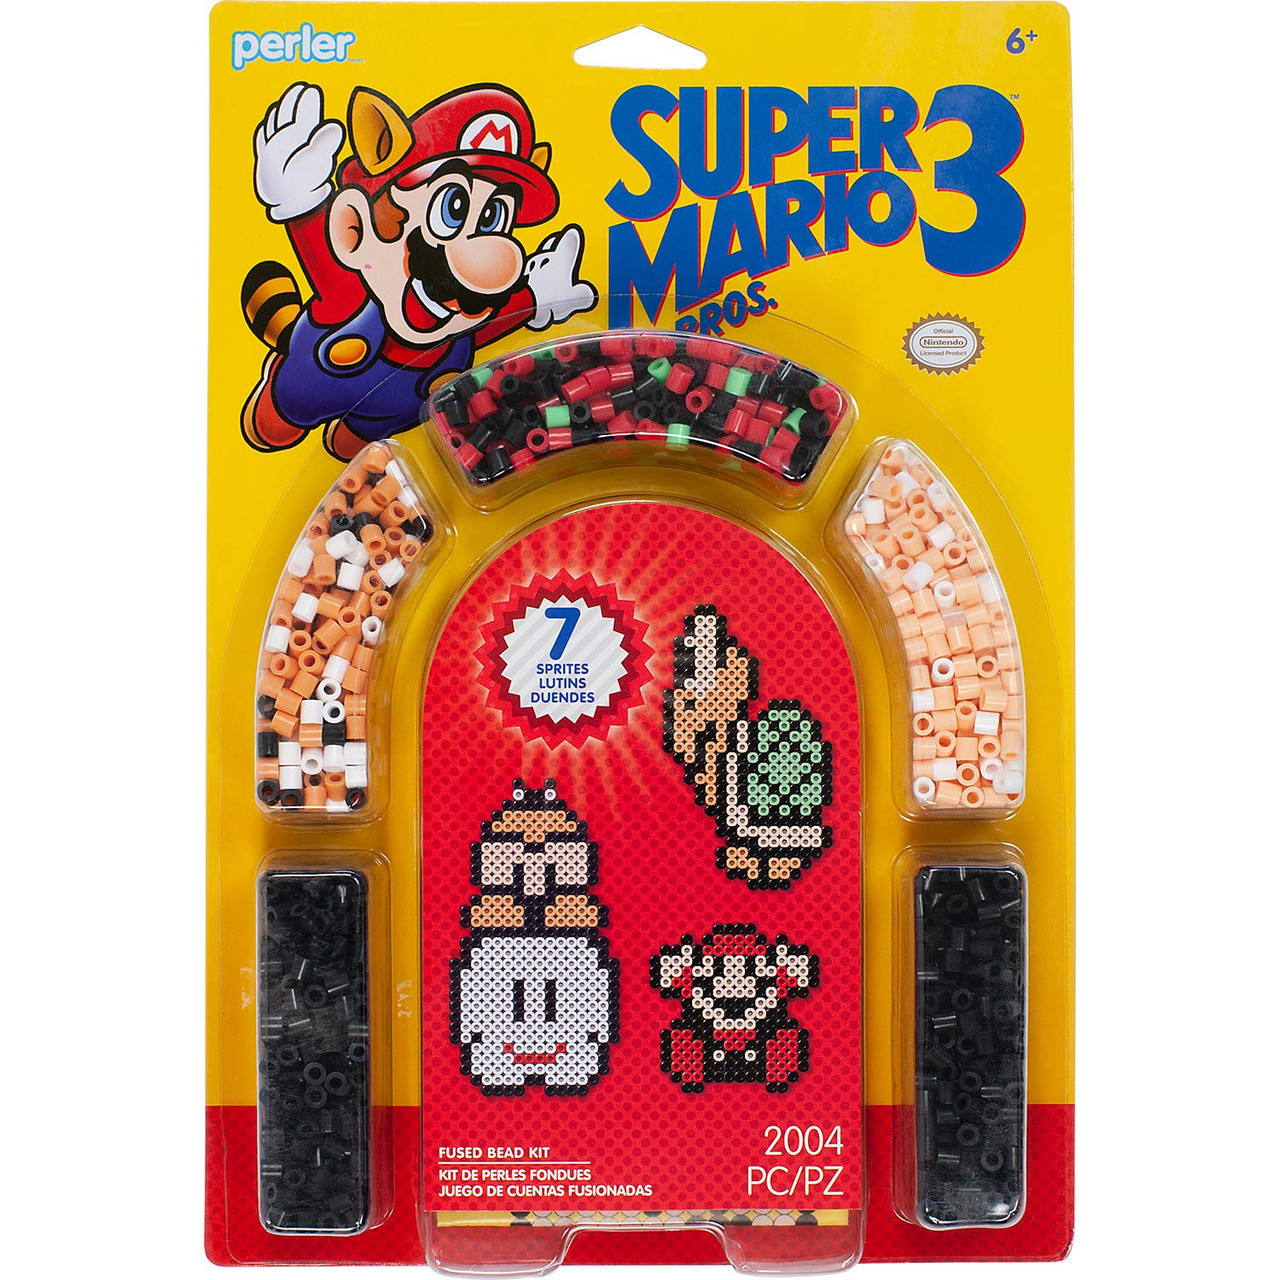 Super Mario Bros. 3 Pattern Pad